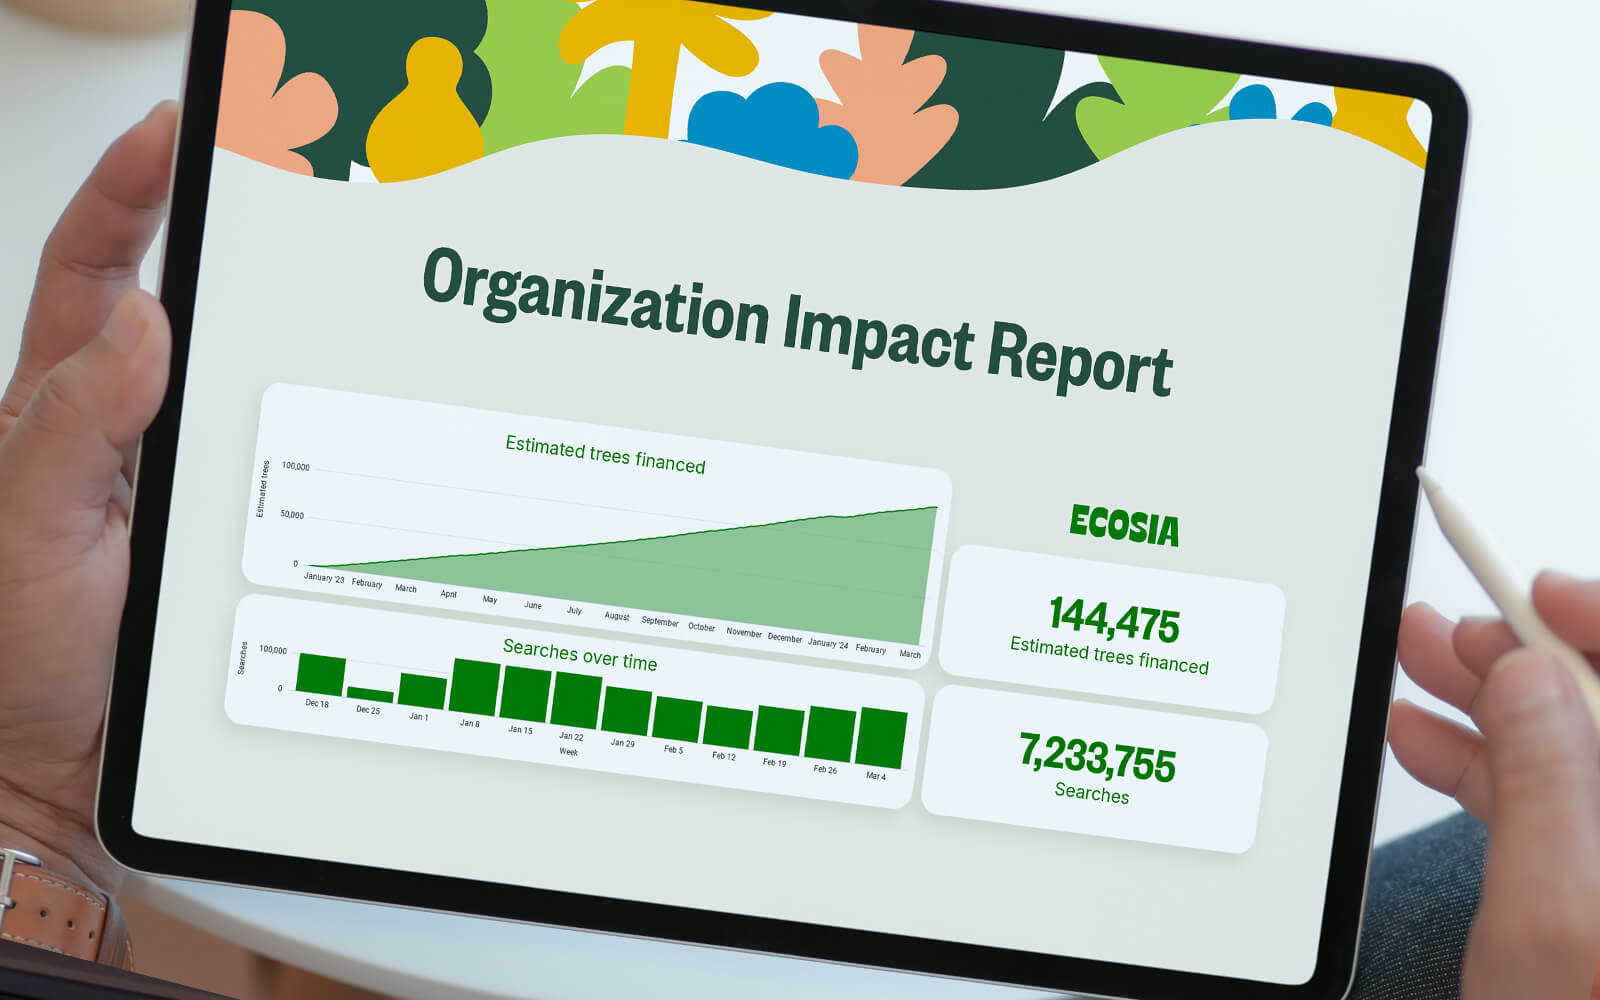 Organization impact reporting